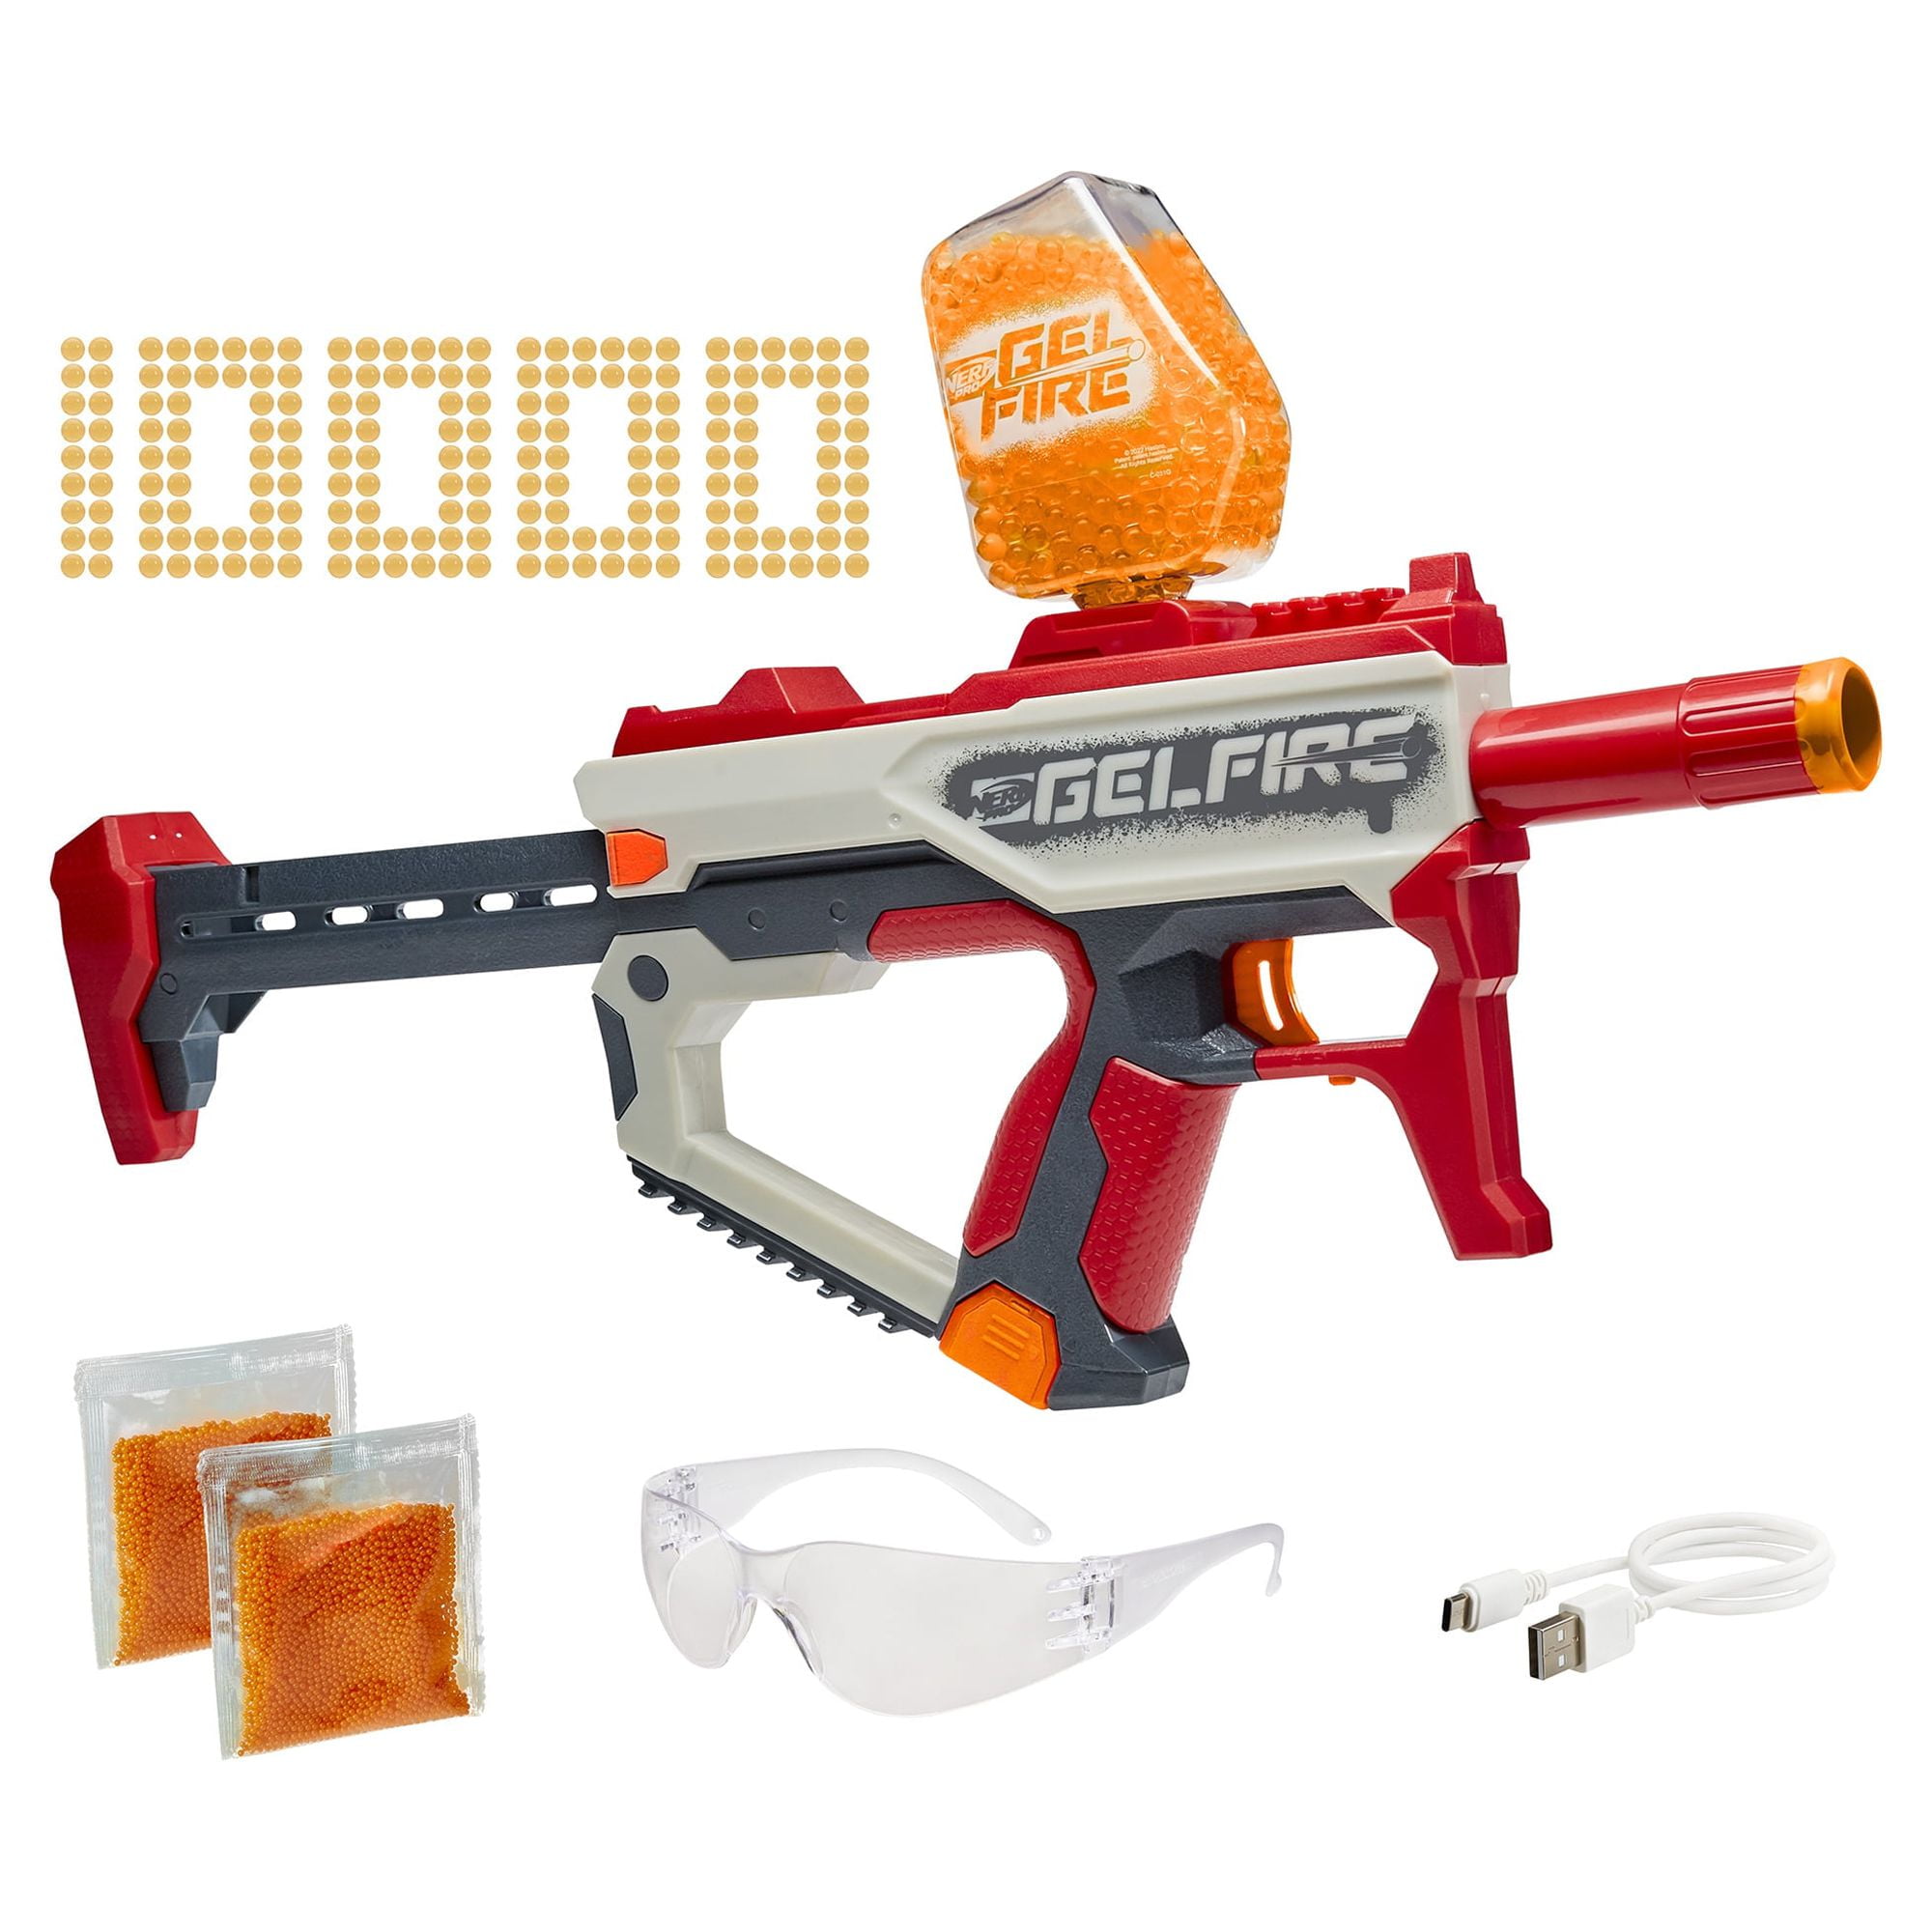 Nerf Pro Gelfire Mythic Blaster, 10,000 Rounds, Hopper